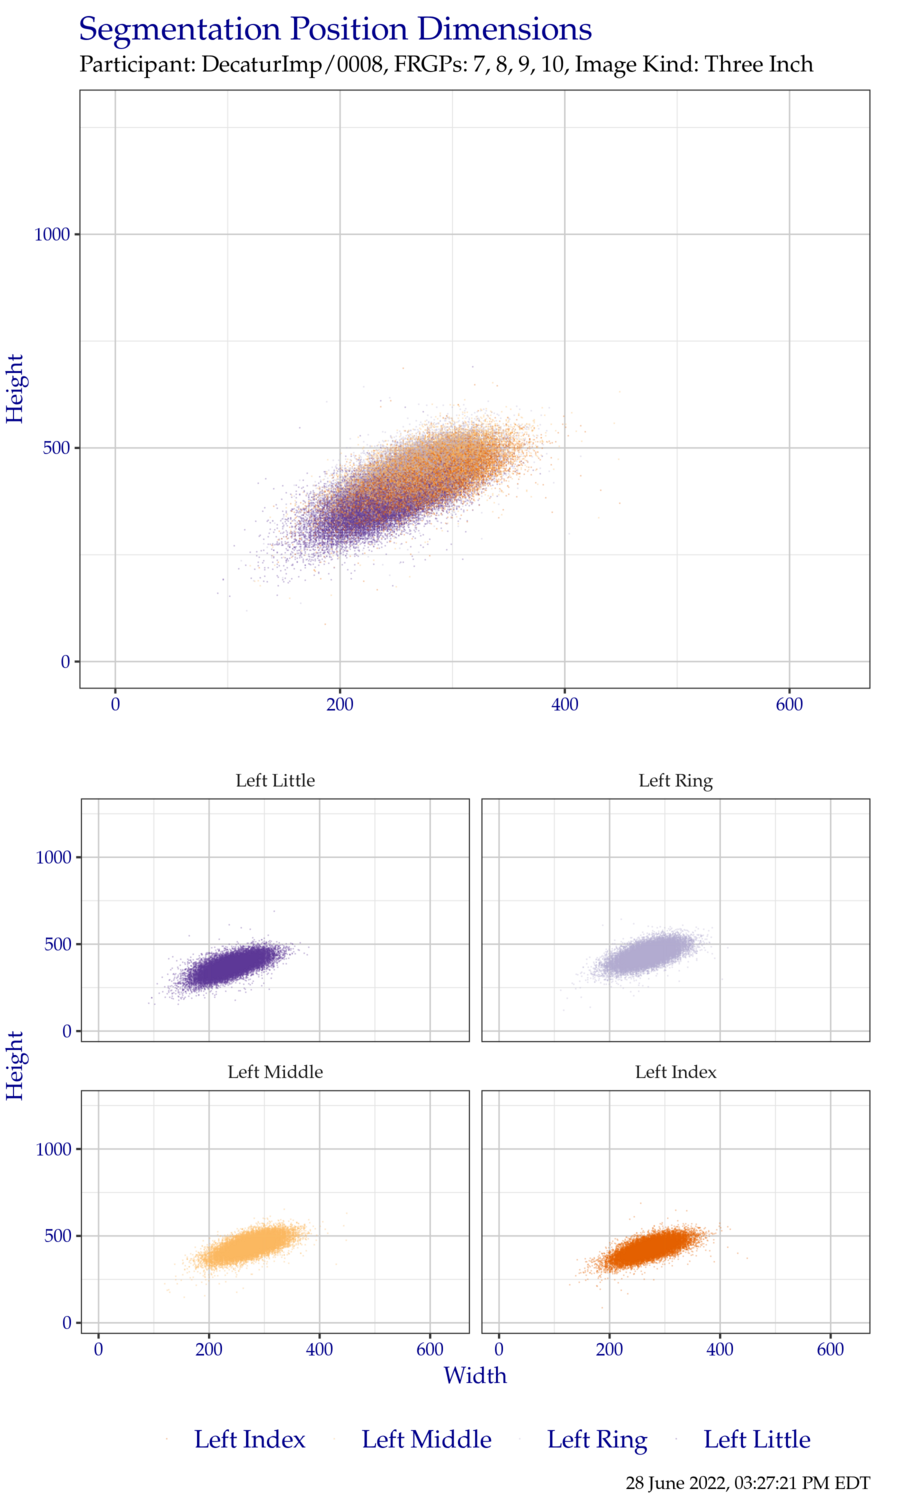 Segmentation position dimensions for left hand ThreeInch data.